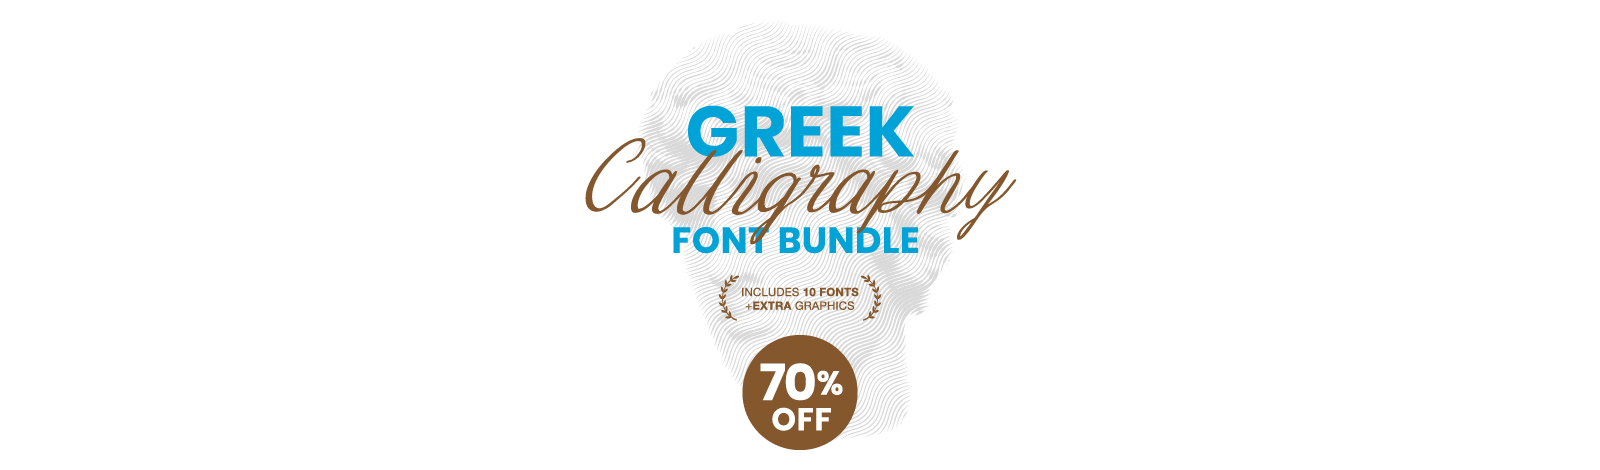 Greek-Calligraphy-Font-Bundle